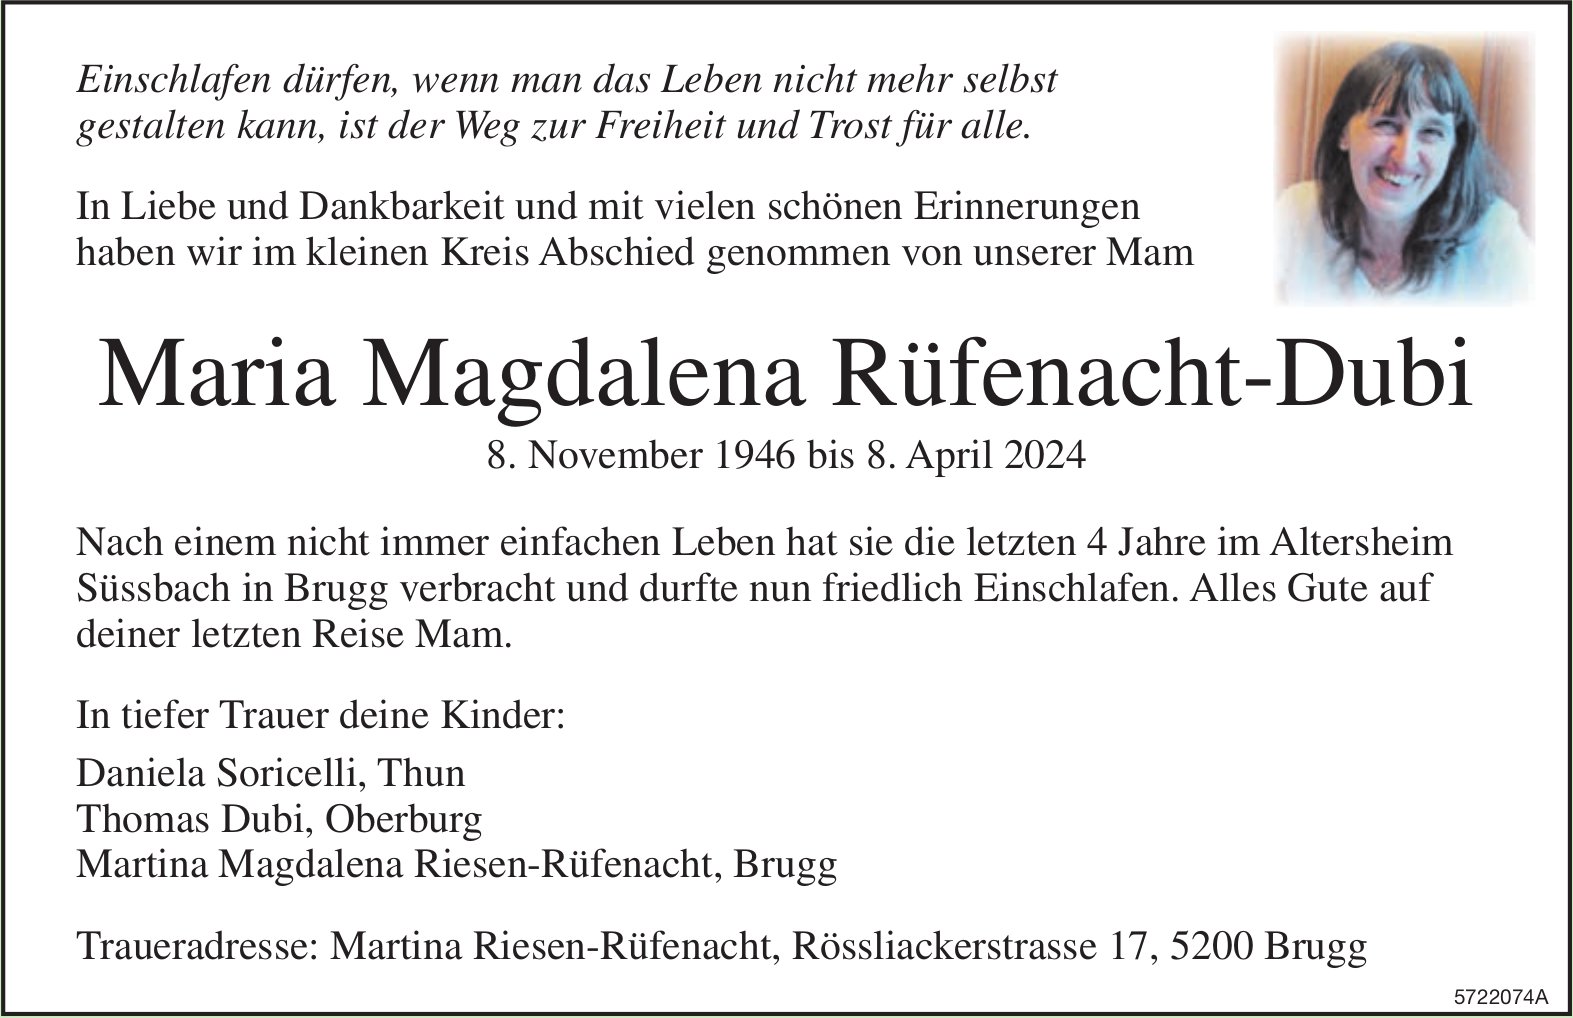 Rüfenacht-Dubi Maria Magdalena, April 2024 / TA